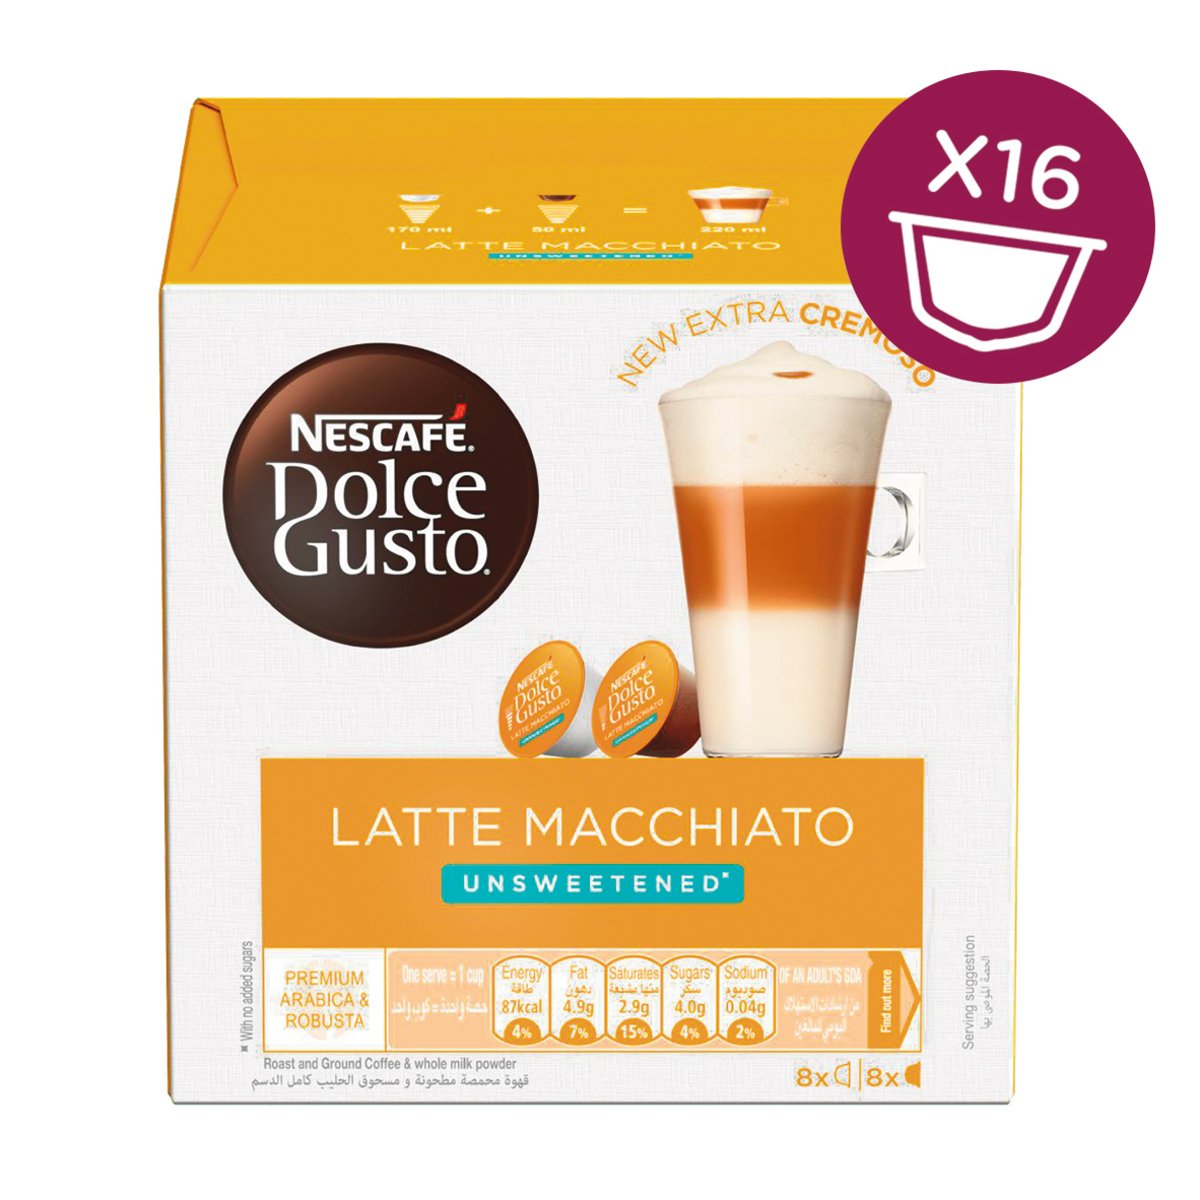 Nescafe Dolce Gusto Latte Macchiato Unsweetened 16 pcs